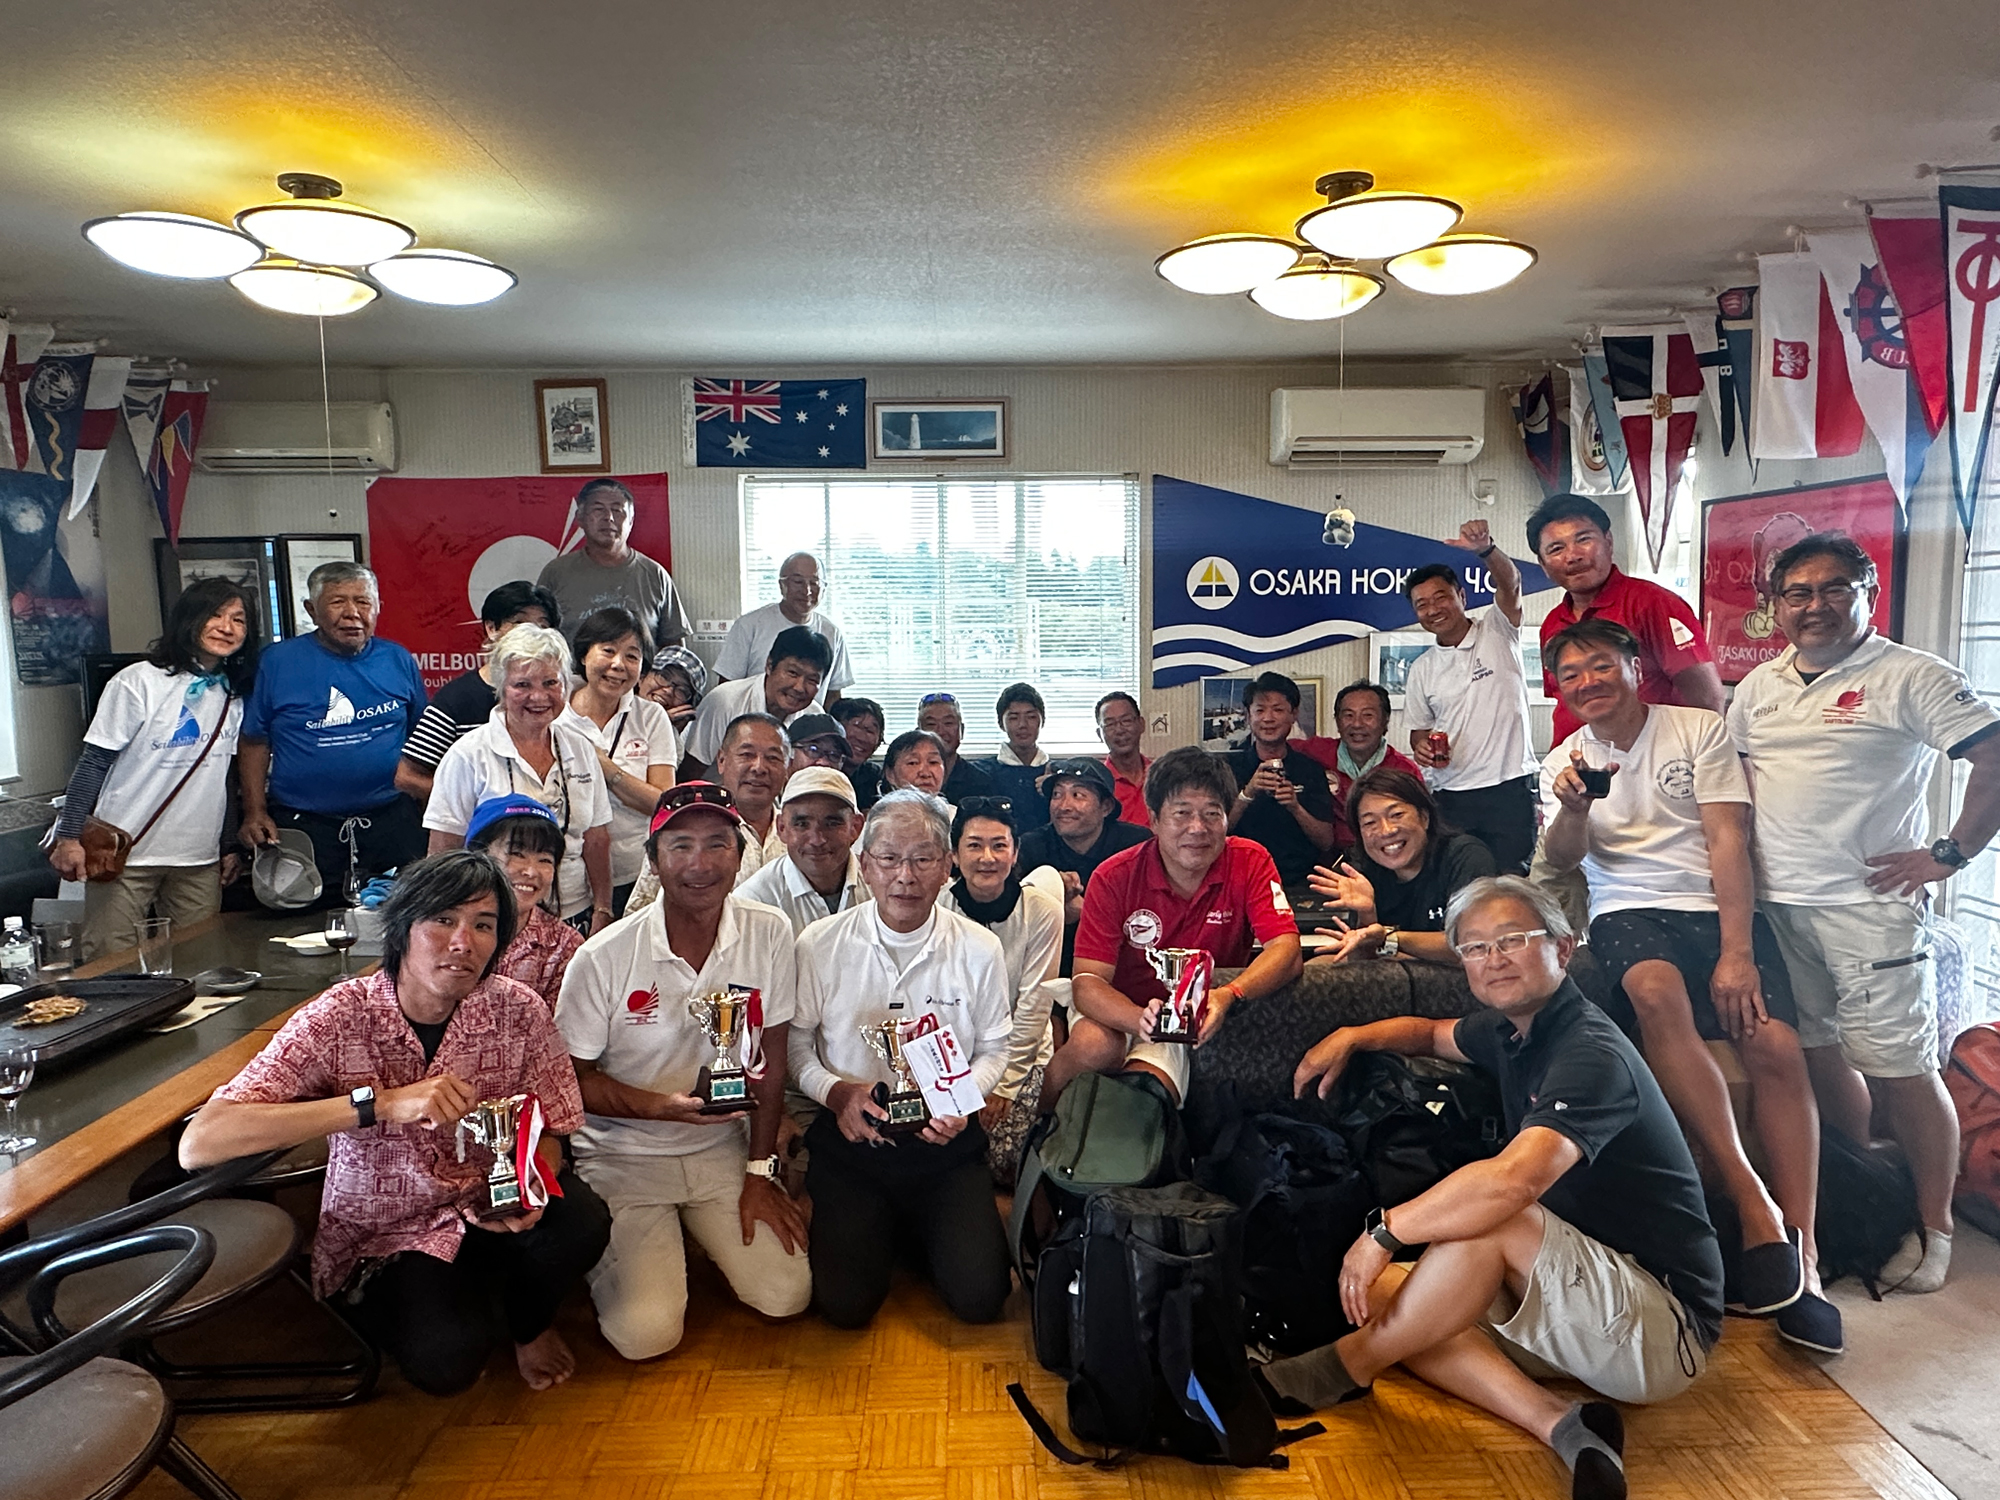 JOSA CUP 第18回大阪湾ダブルハンドヨットレース表彰式記念撮影